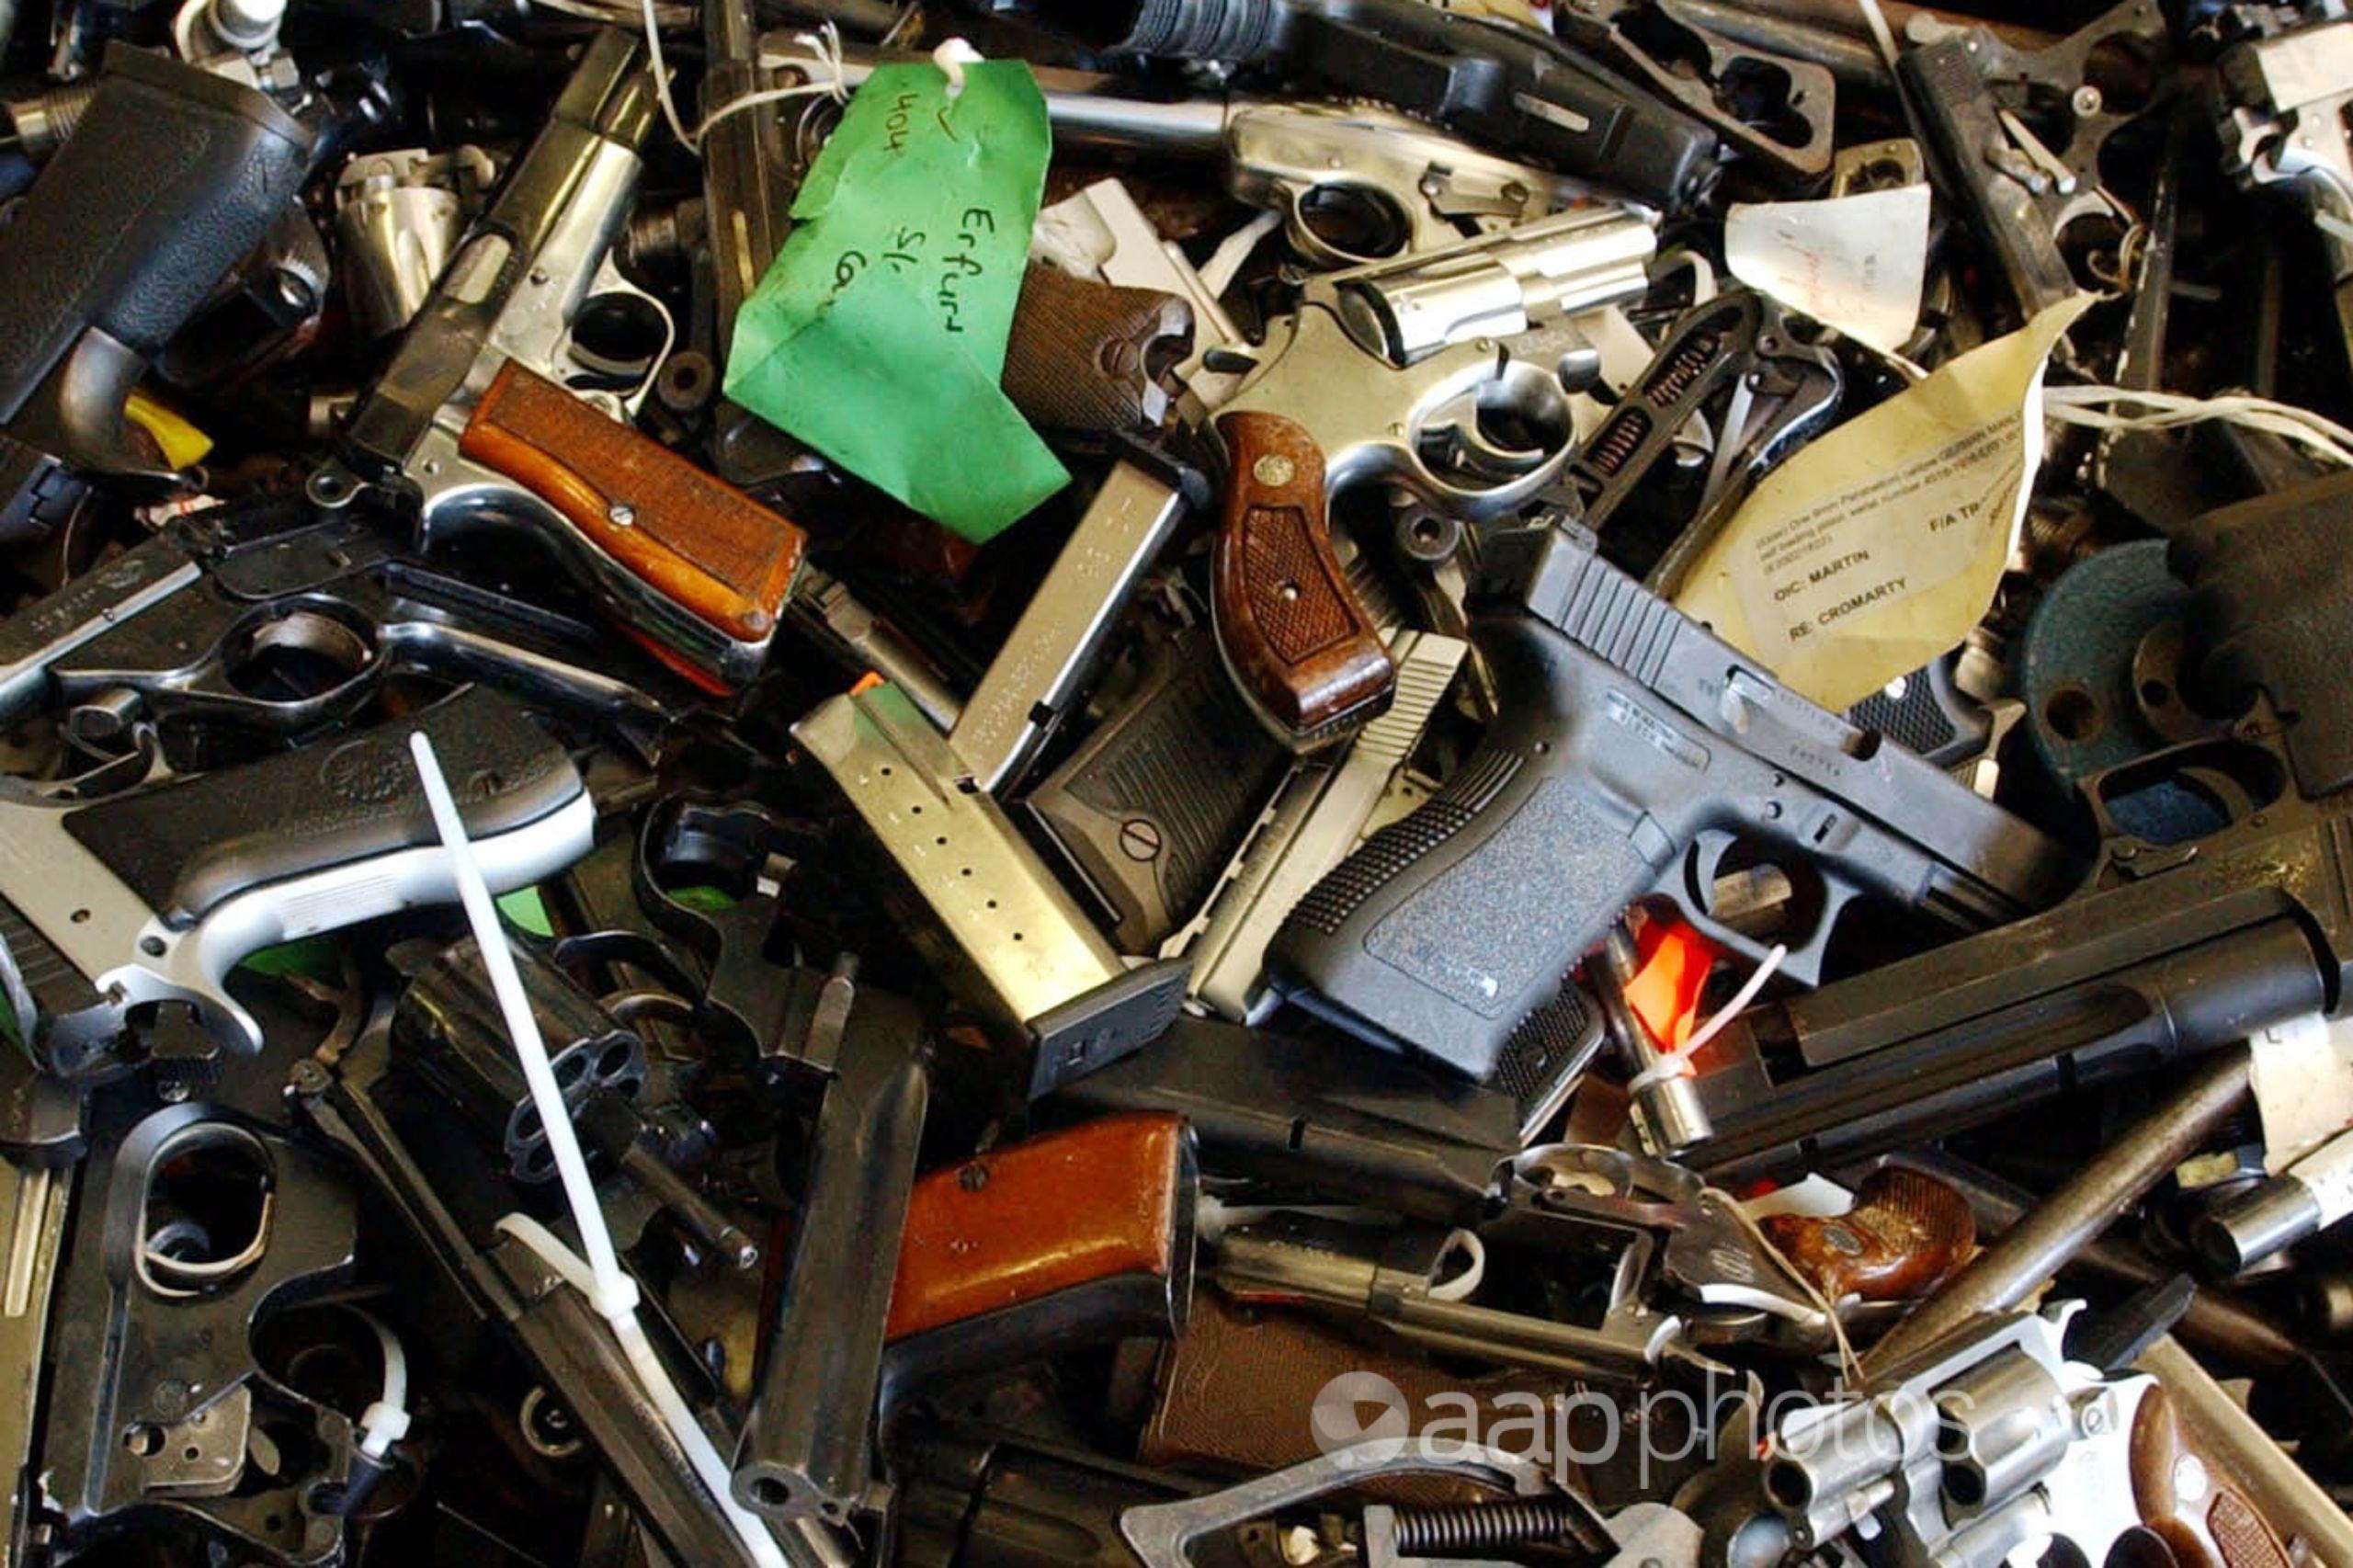 Reloaded "police officer's on Aussie gun laws the mark again - Australian Associated Press